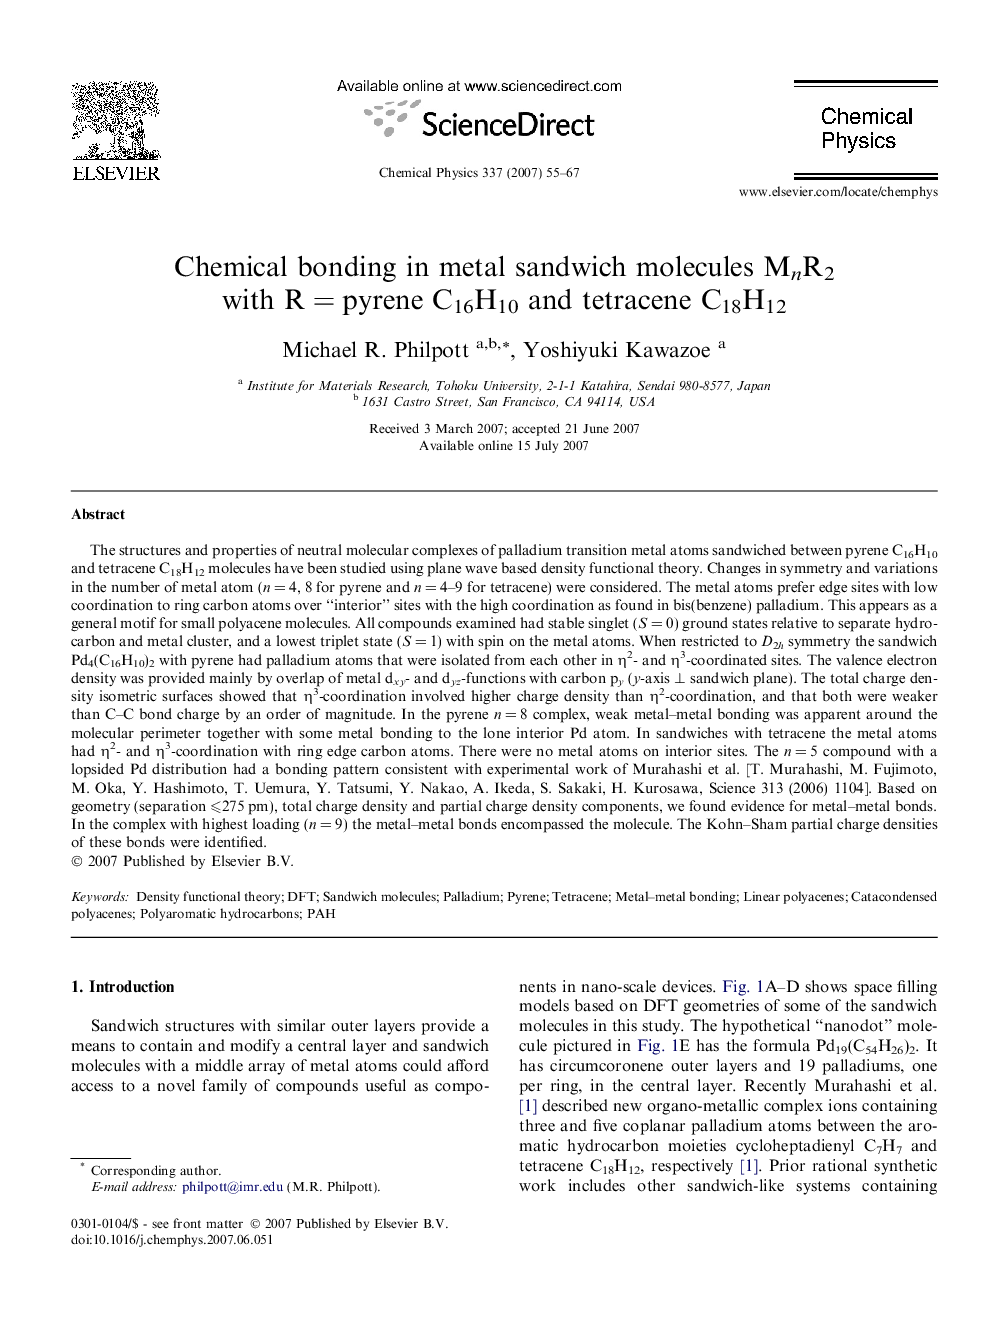 Chemical bonding in metal sandwich molecules MnR2 with RÂ =Â pyrene C16H10 and tetracene C18H12